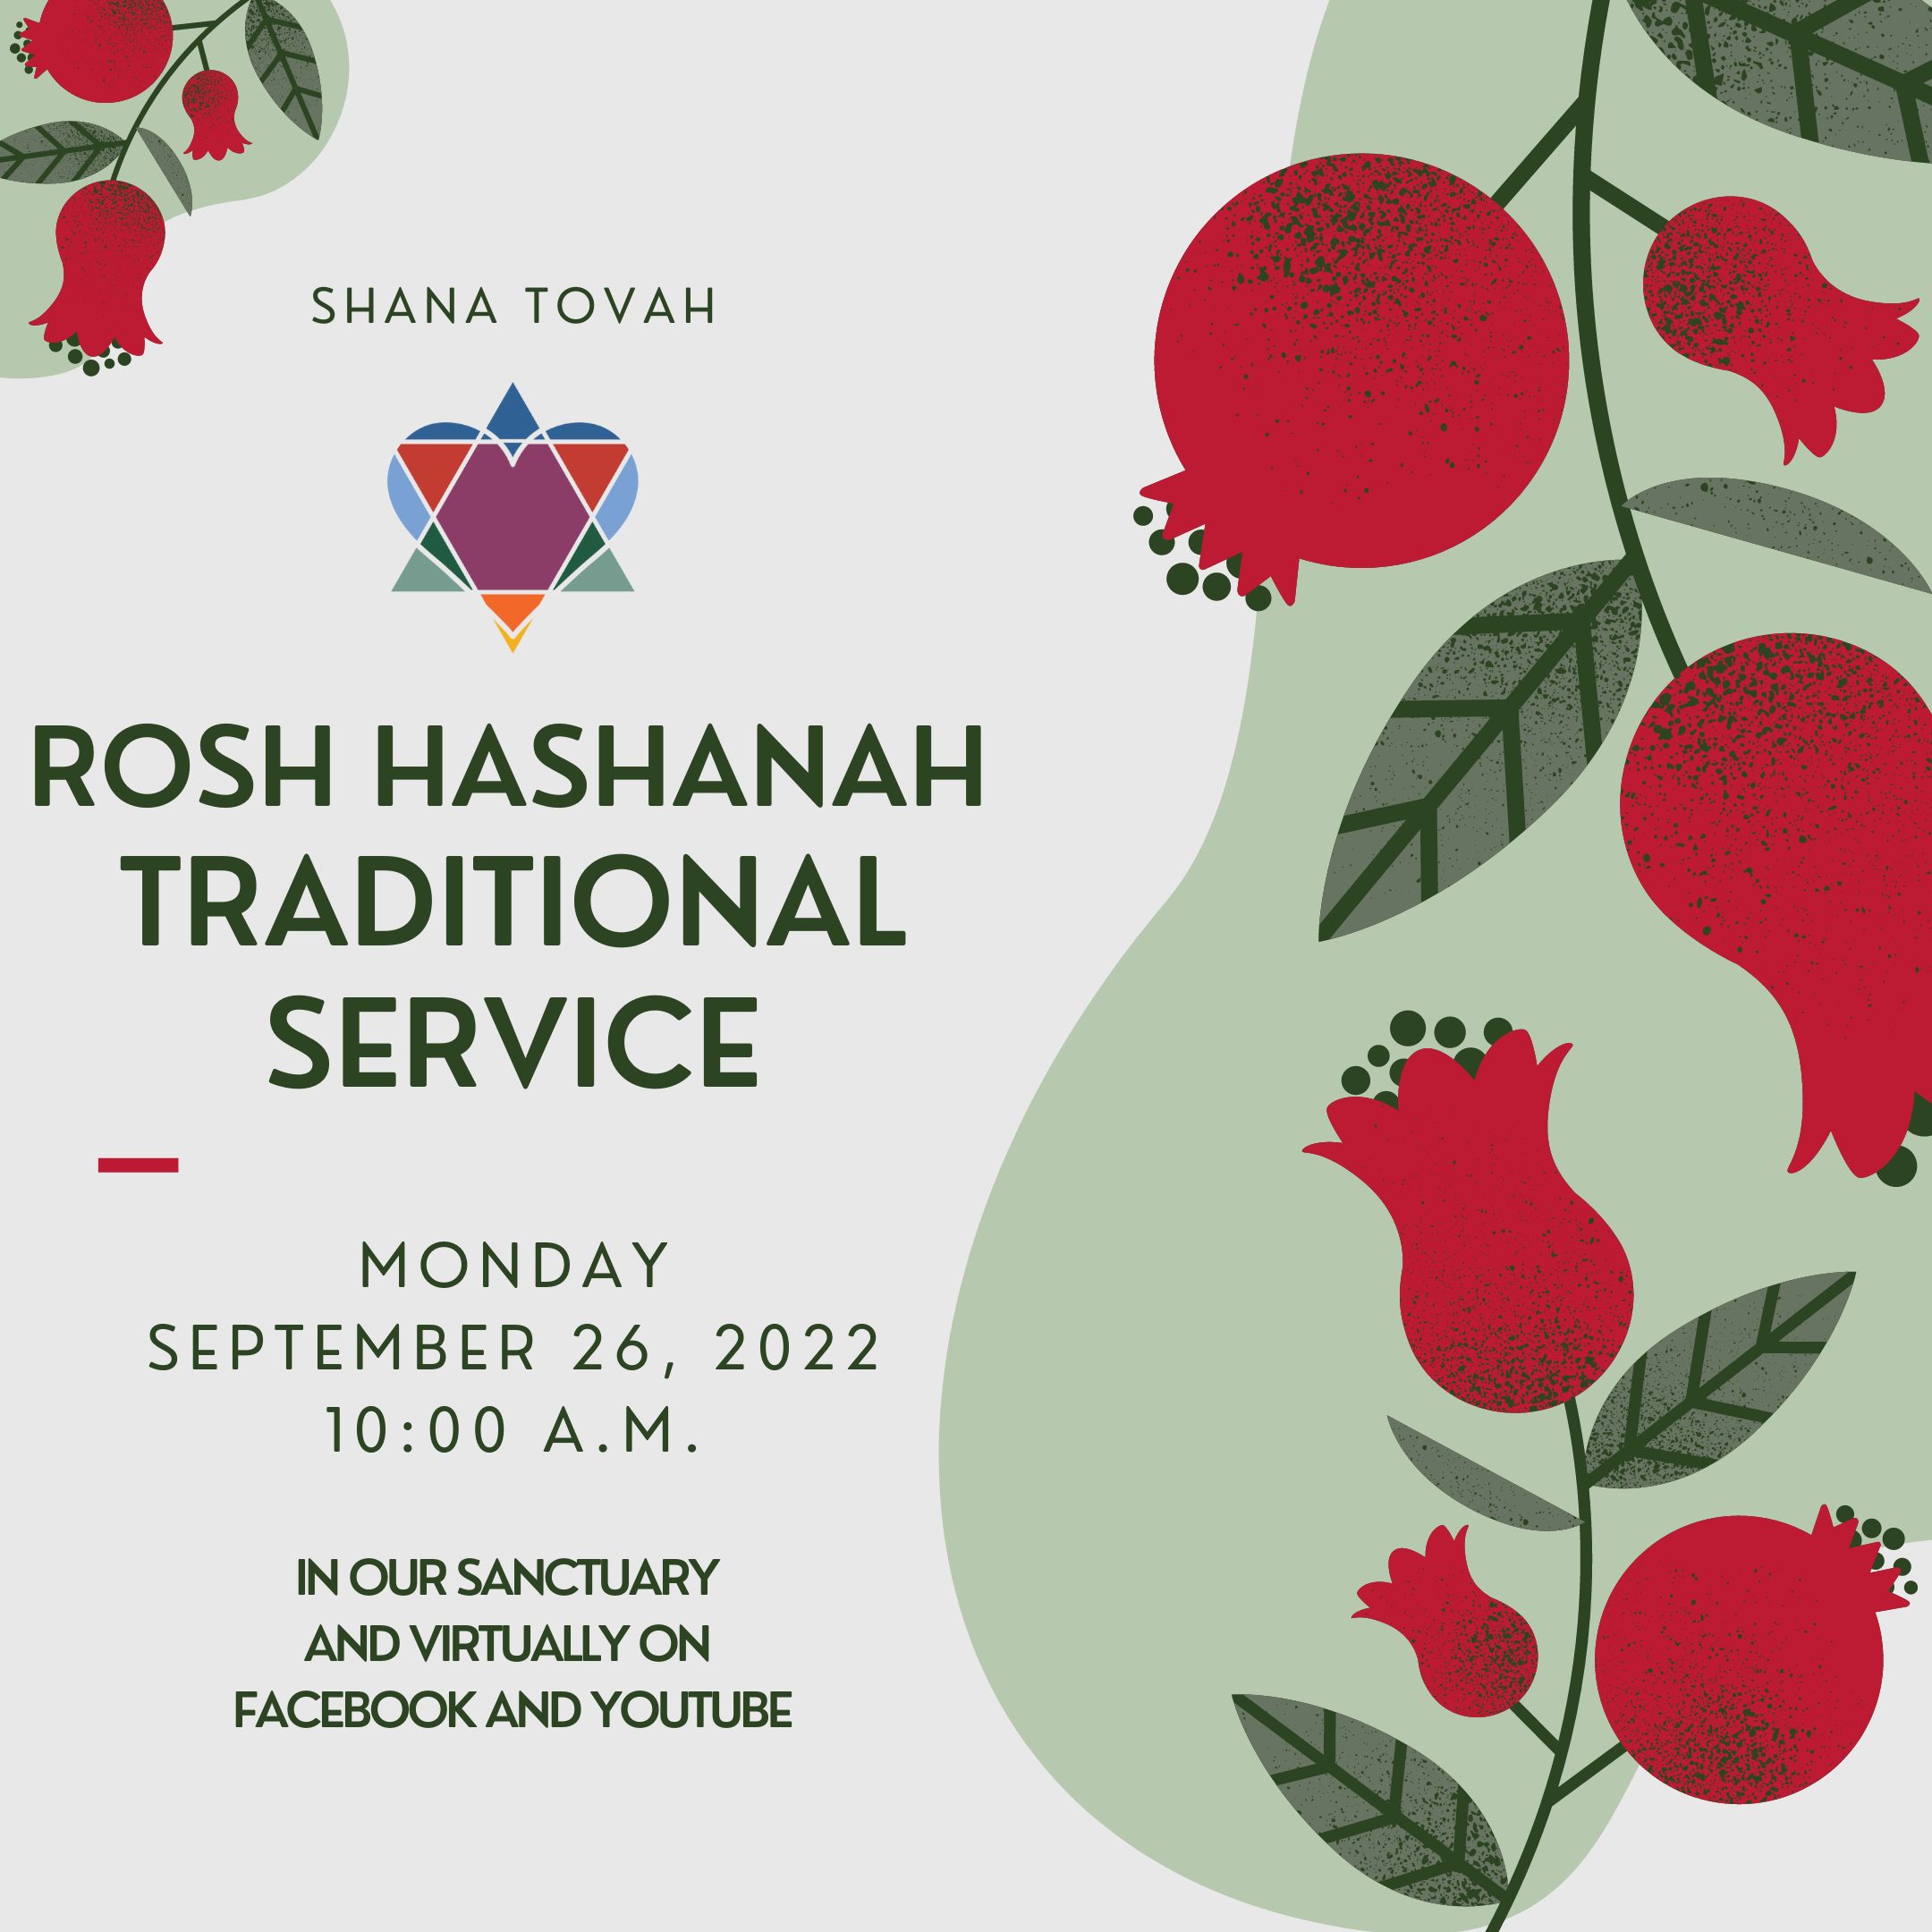 ROSH HASHANAH TRADITIONAL SERVICE